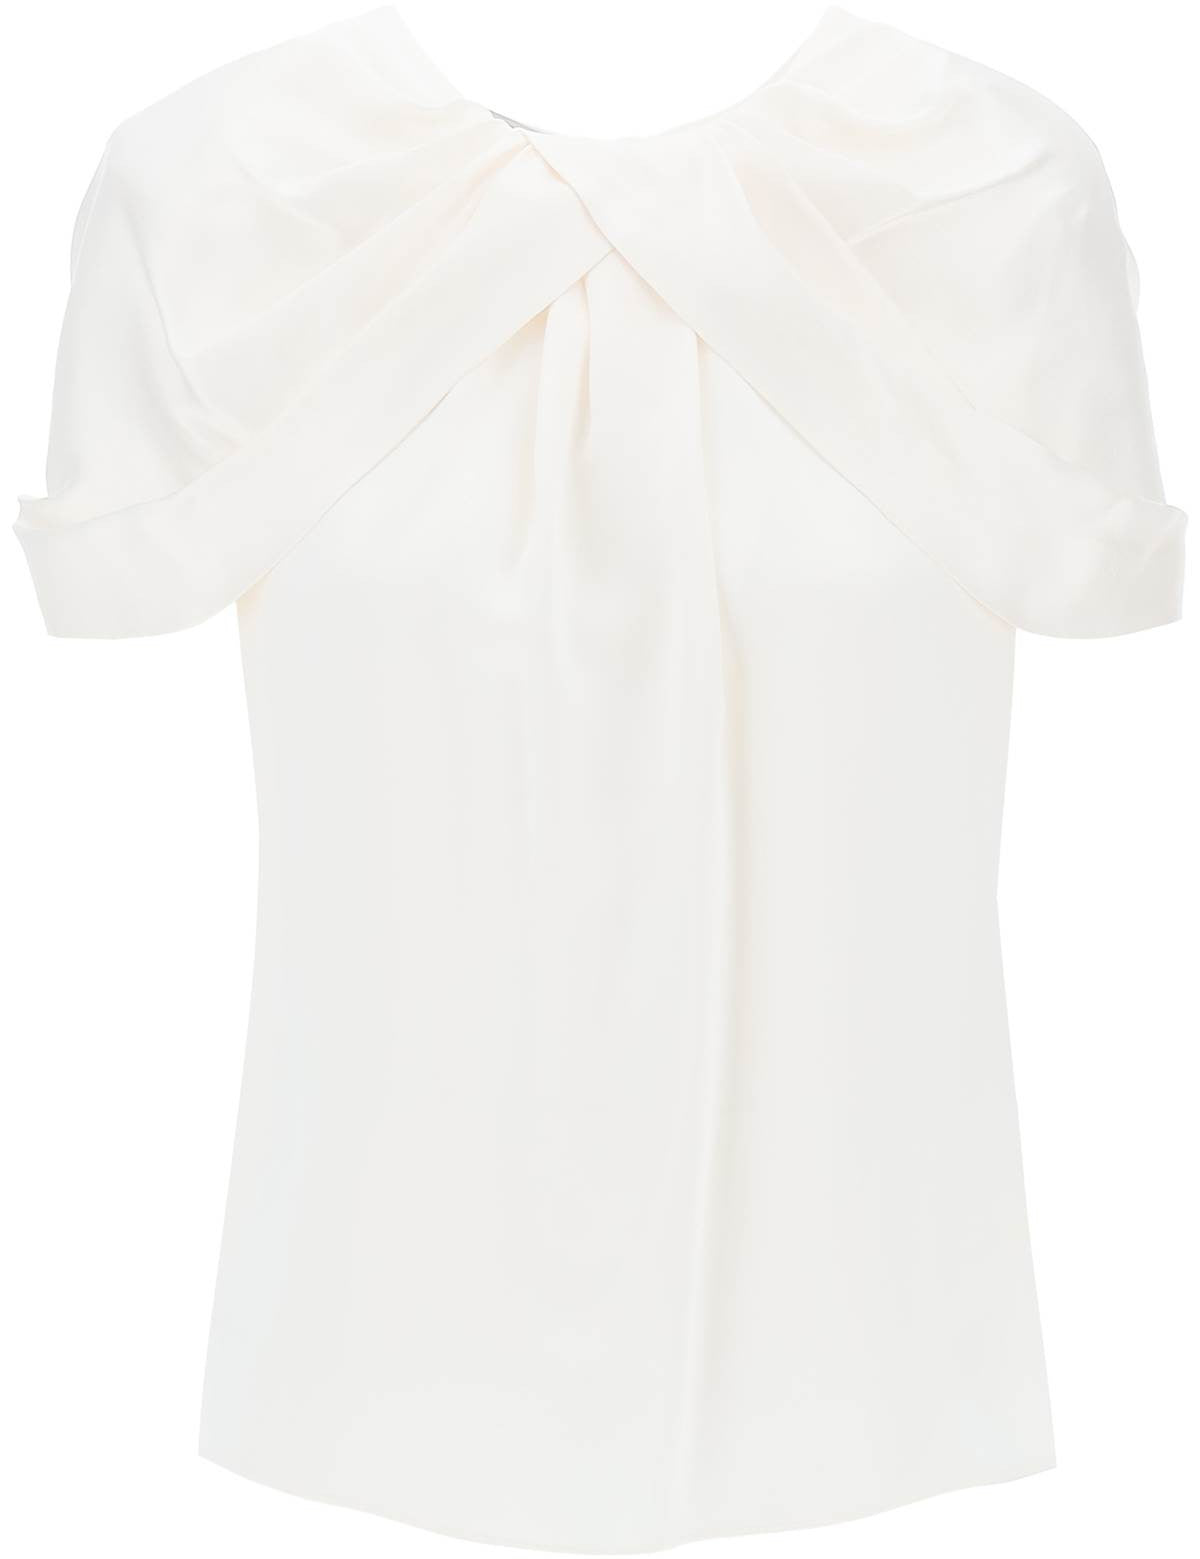 stella-mccartney-satin-blouse-with-petal-sleeves.jpg